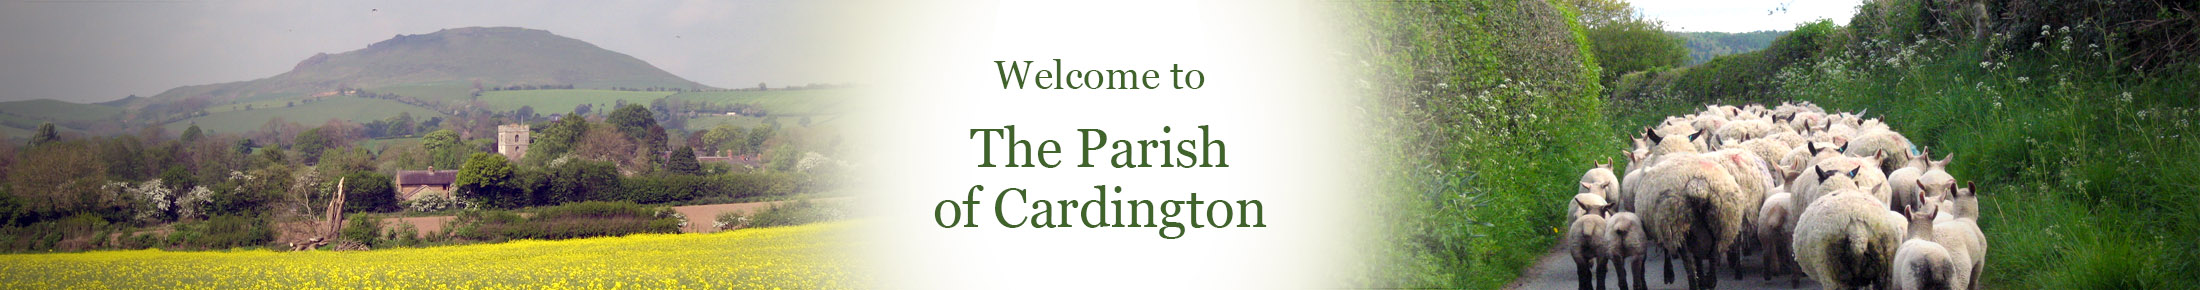 Header Image for Cardington Parish Council